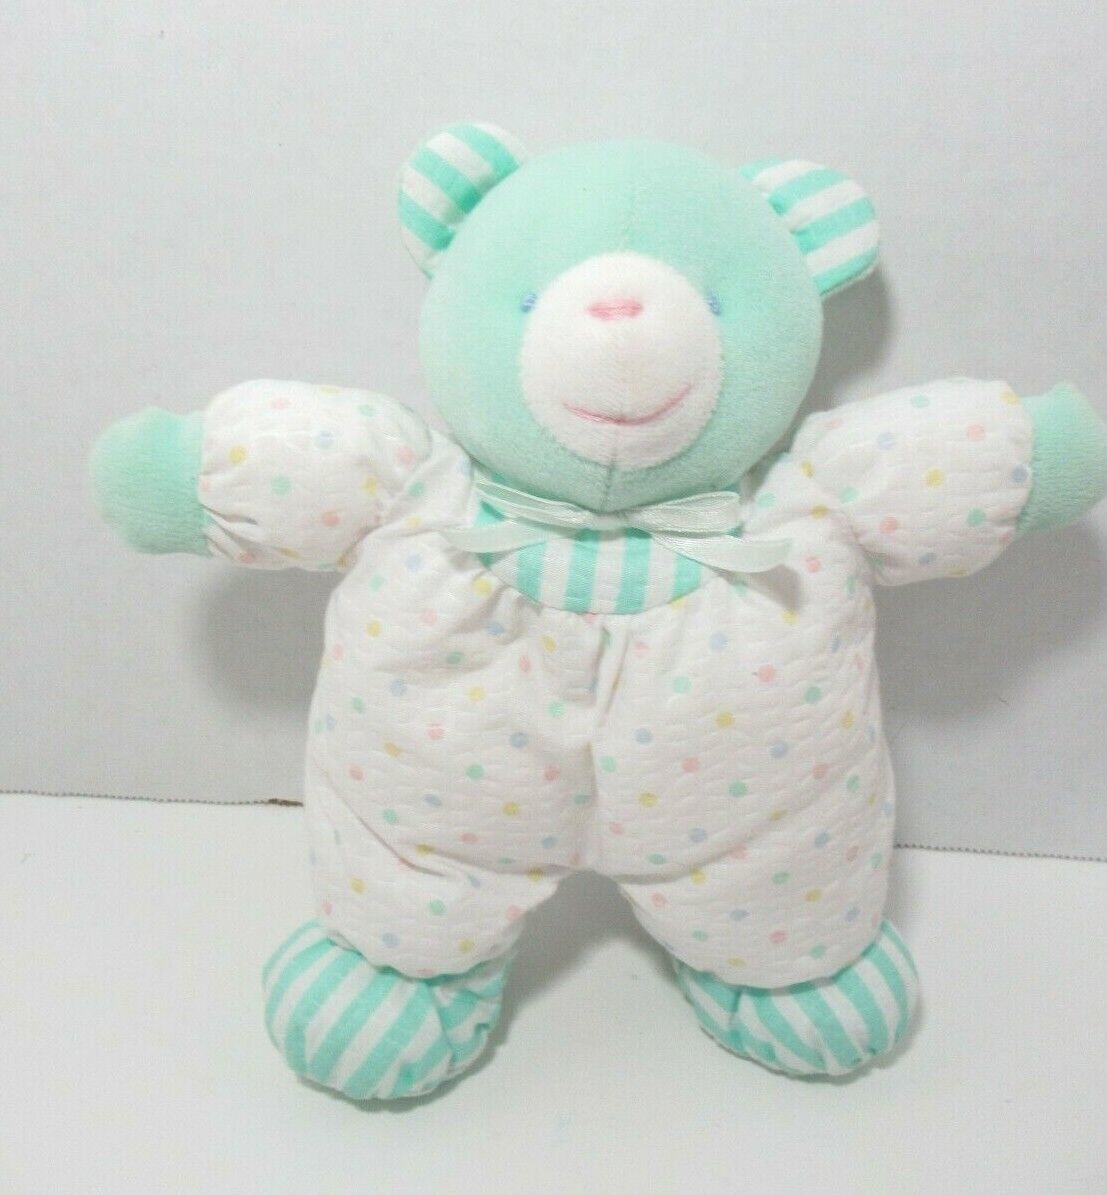 Eden Baby plush rattle green teddy bear stripes pastel pink blue polka dots bow - $49.49